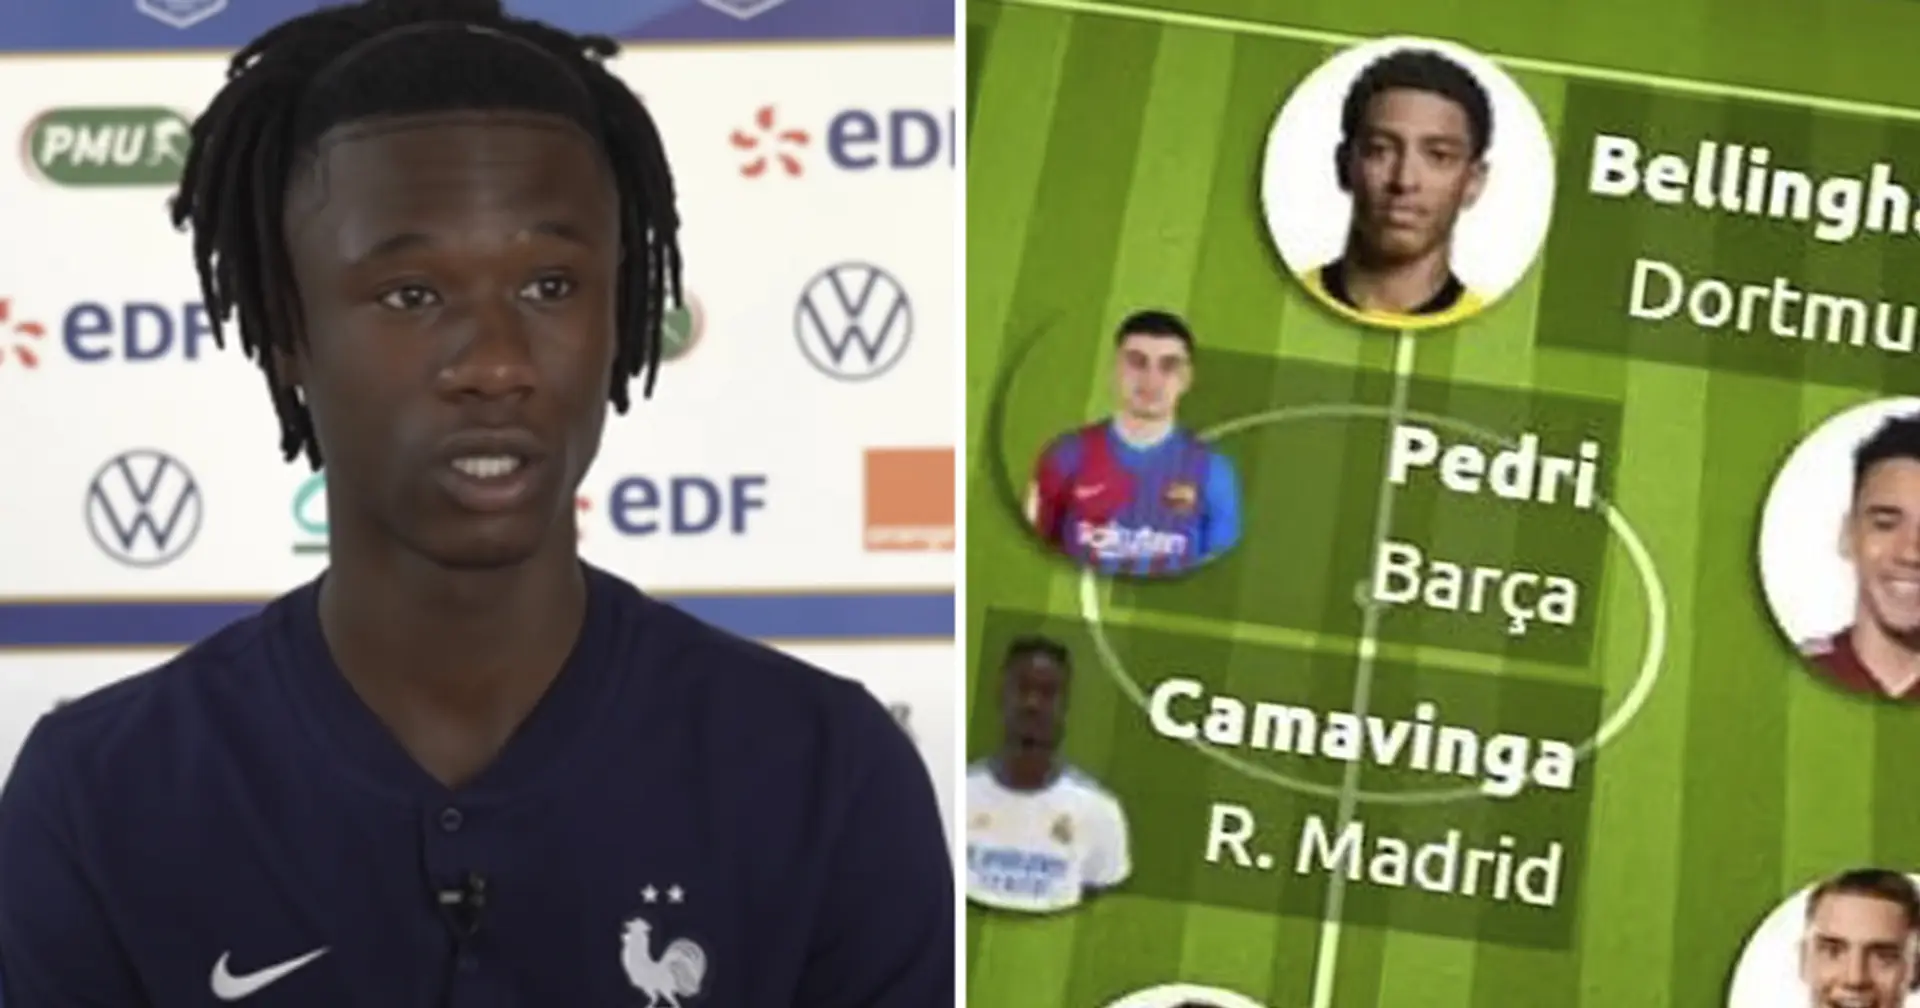 Camavinga in: Europe's best U18 squad unveiled